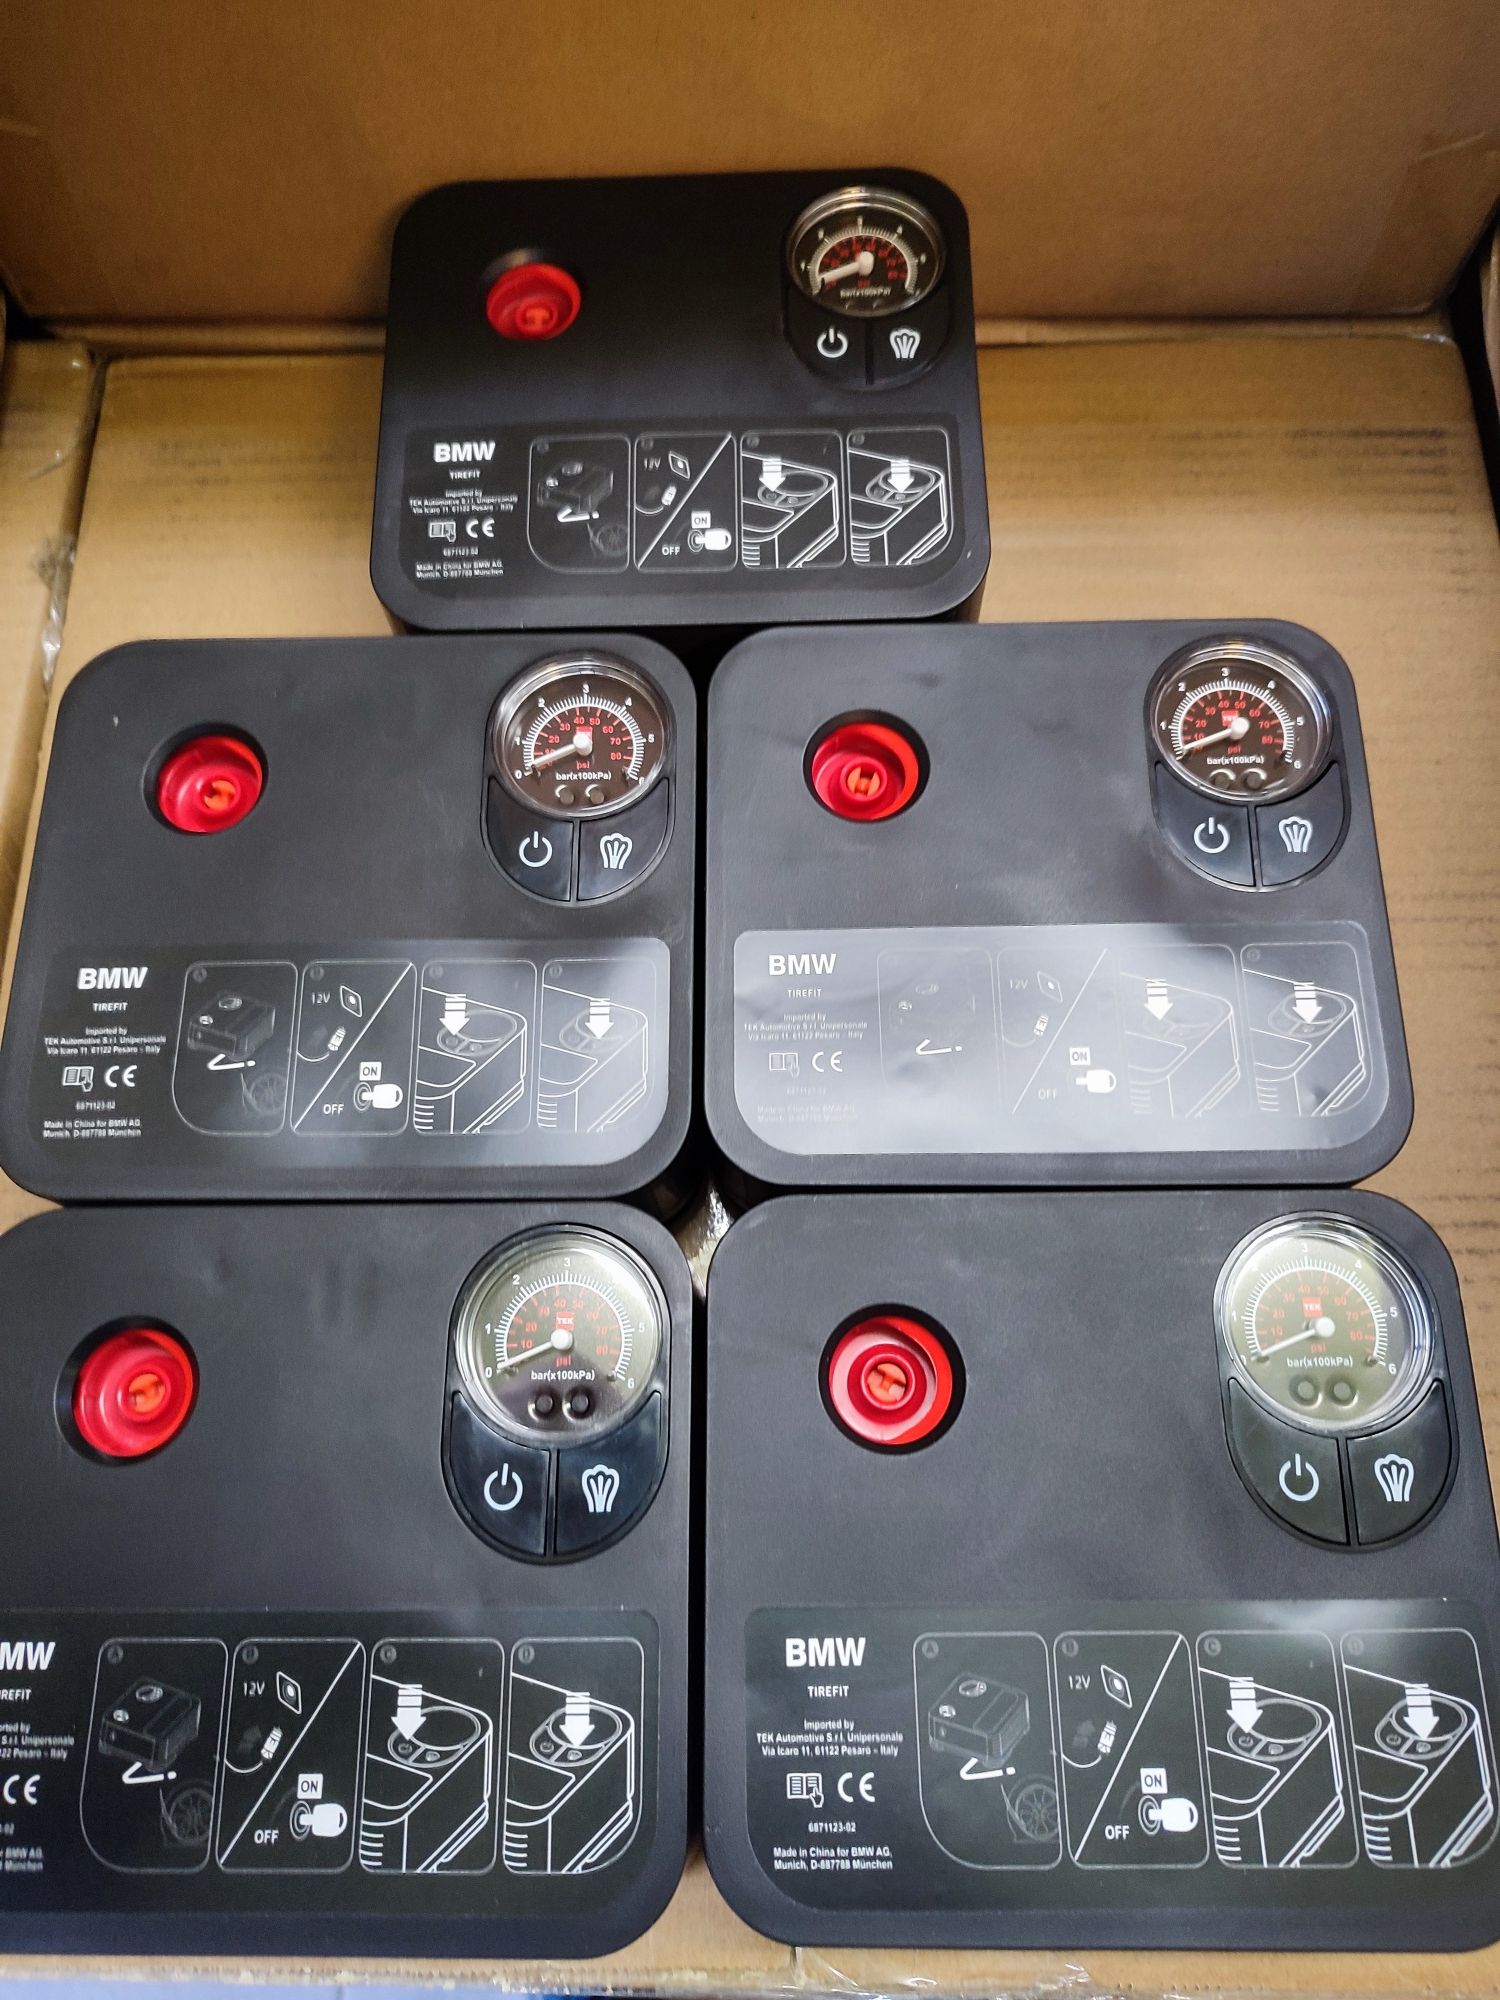 Оригинални компресори за въздух за BMW Х5/Х6,Х4,Х3,X2,X1,G11,G30...